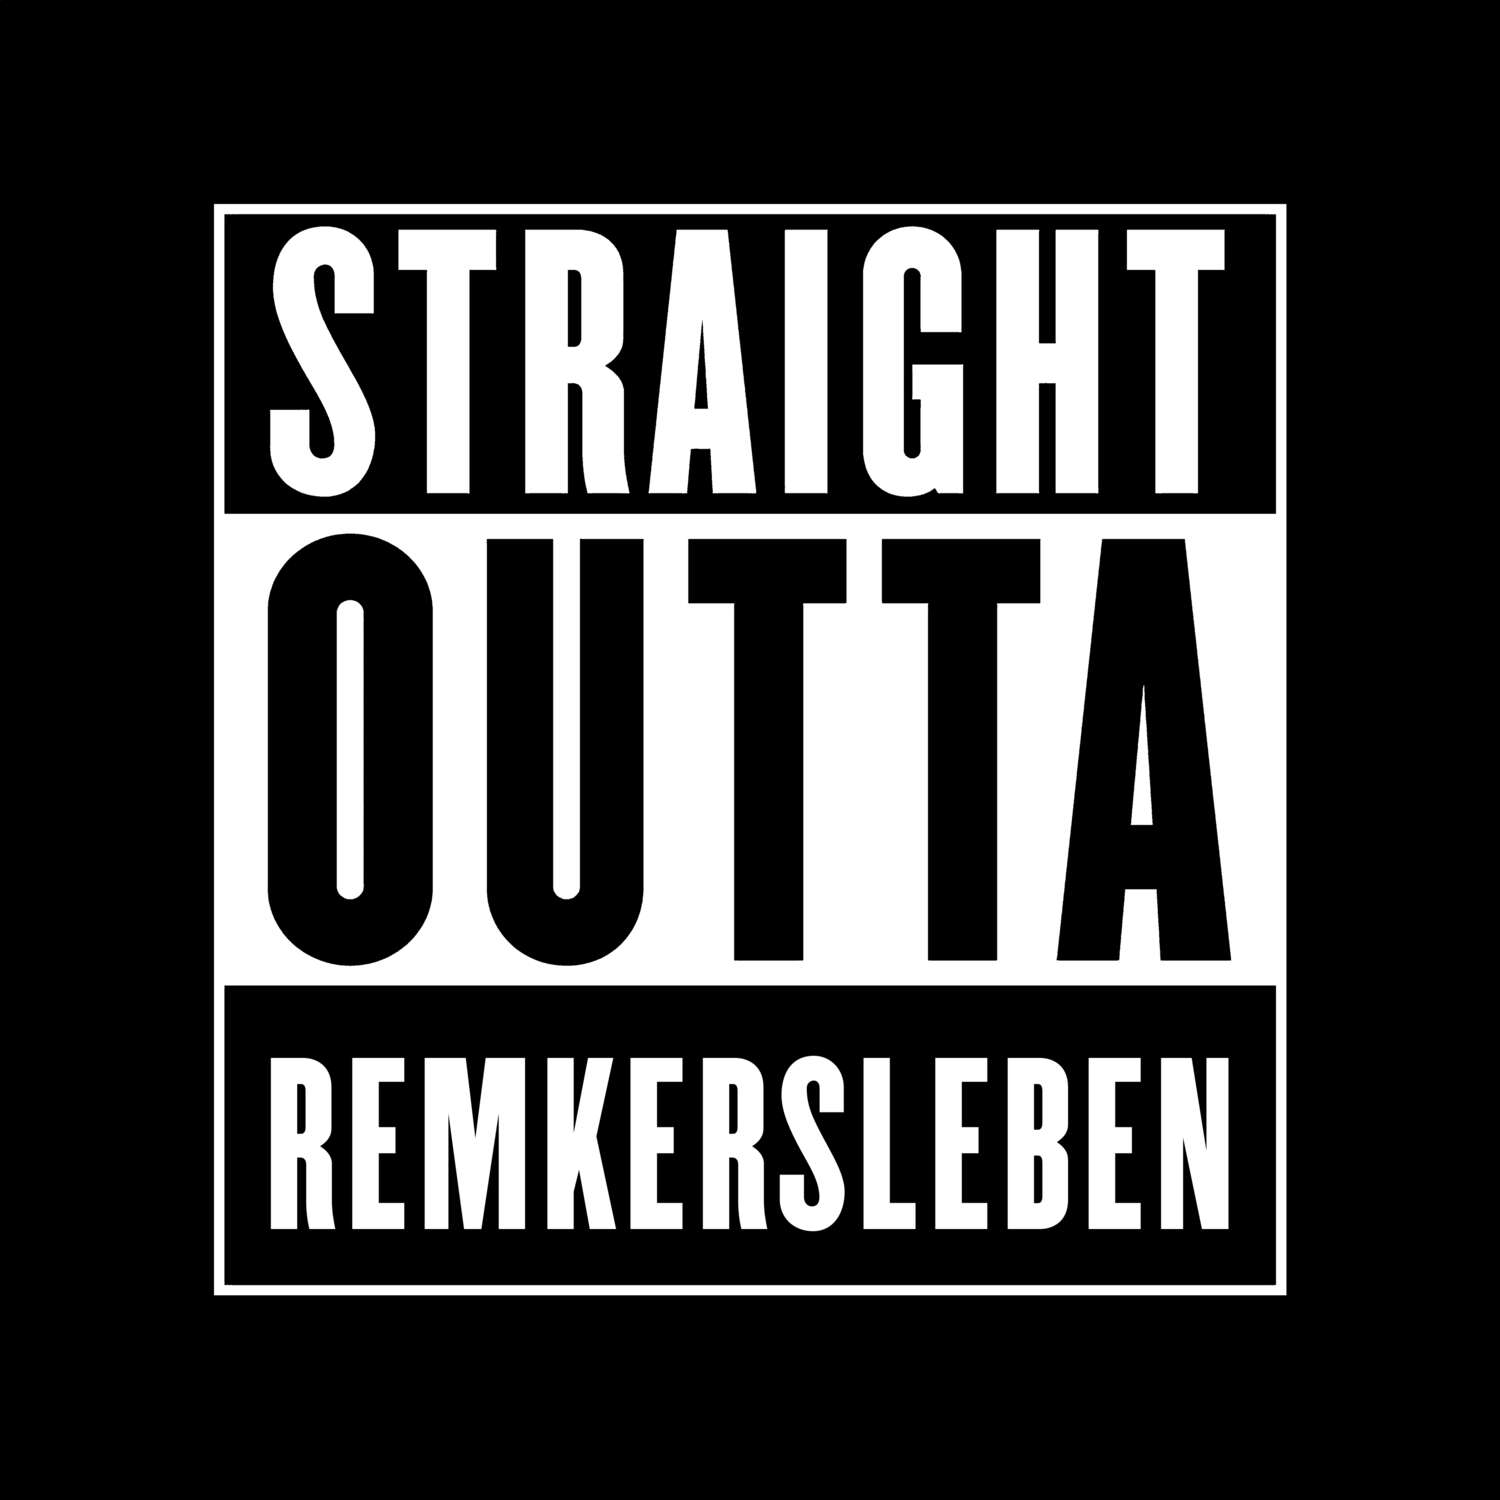 Remkersleben T-Shirt »Straight Outta«